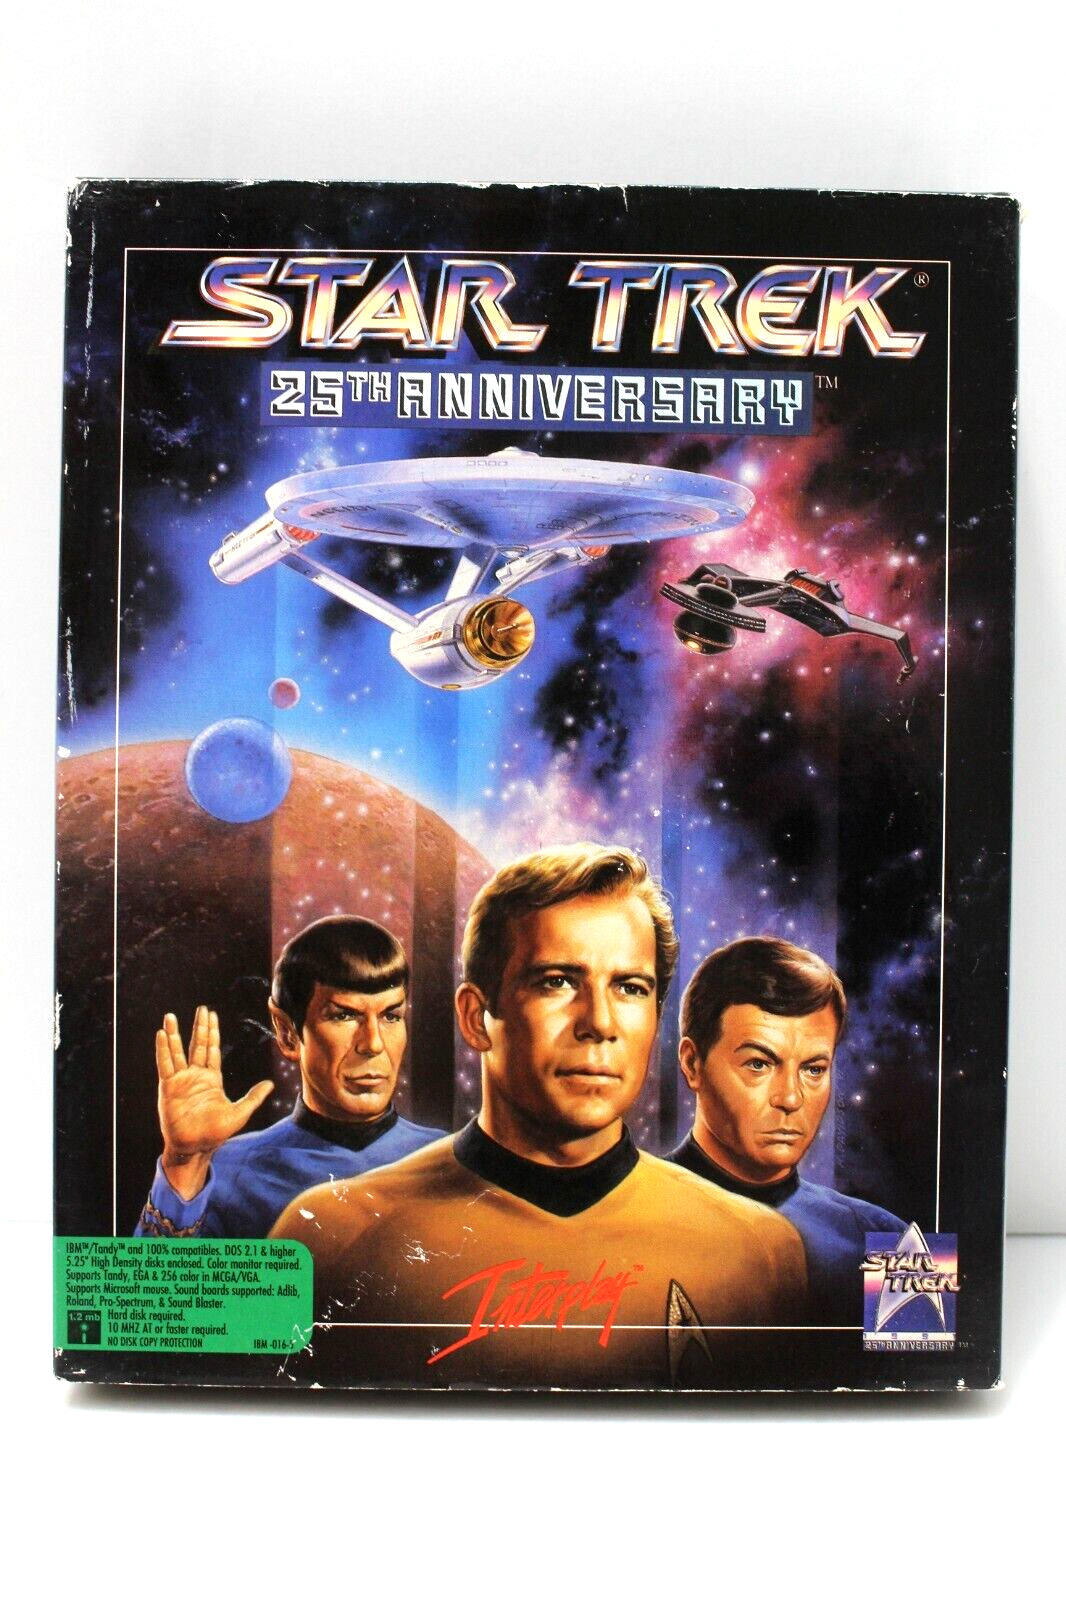 Star Trek 25th Anniversary; 5 1/2 Floppy Disks - Interplay, 1991